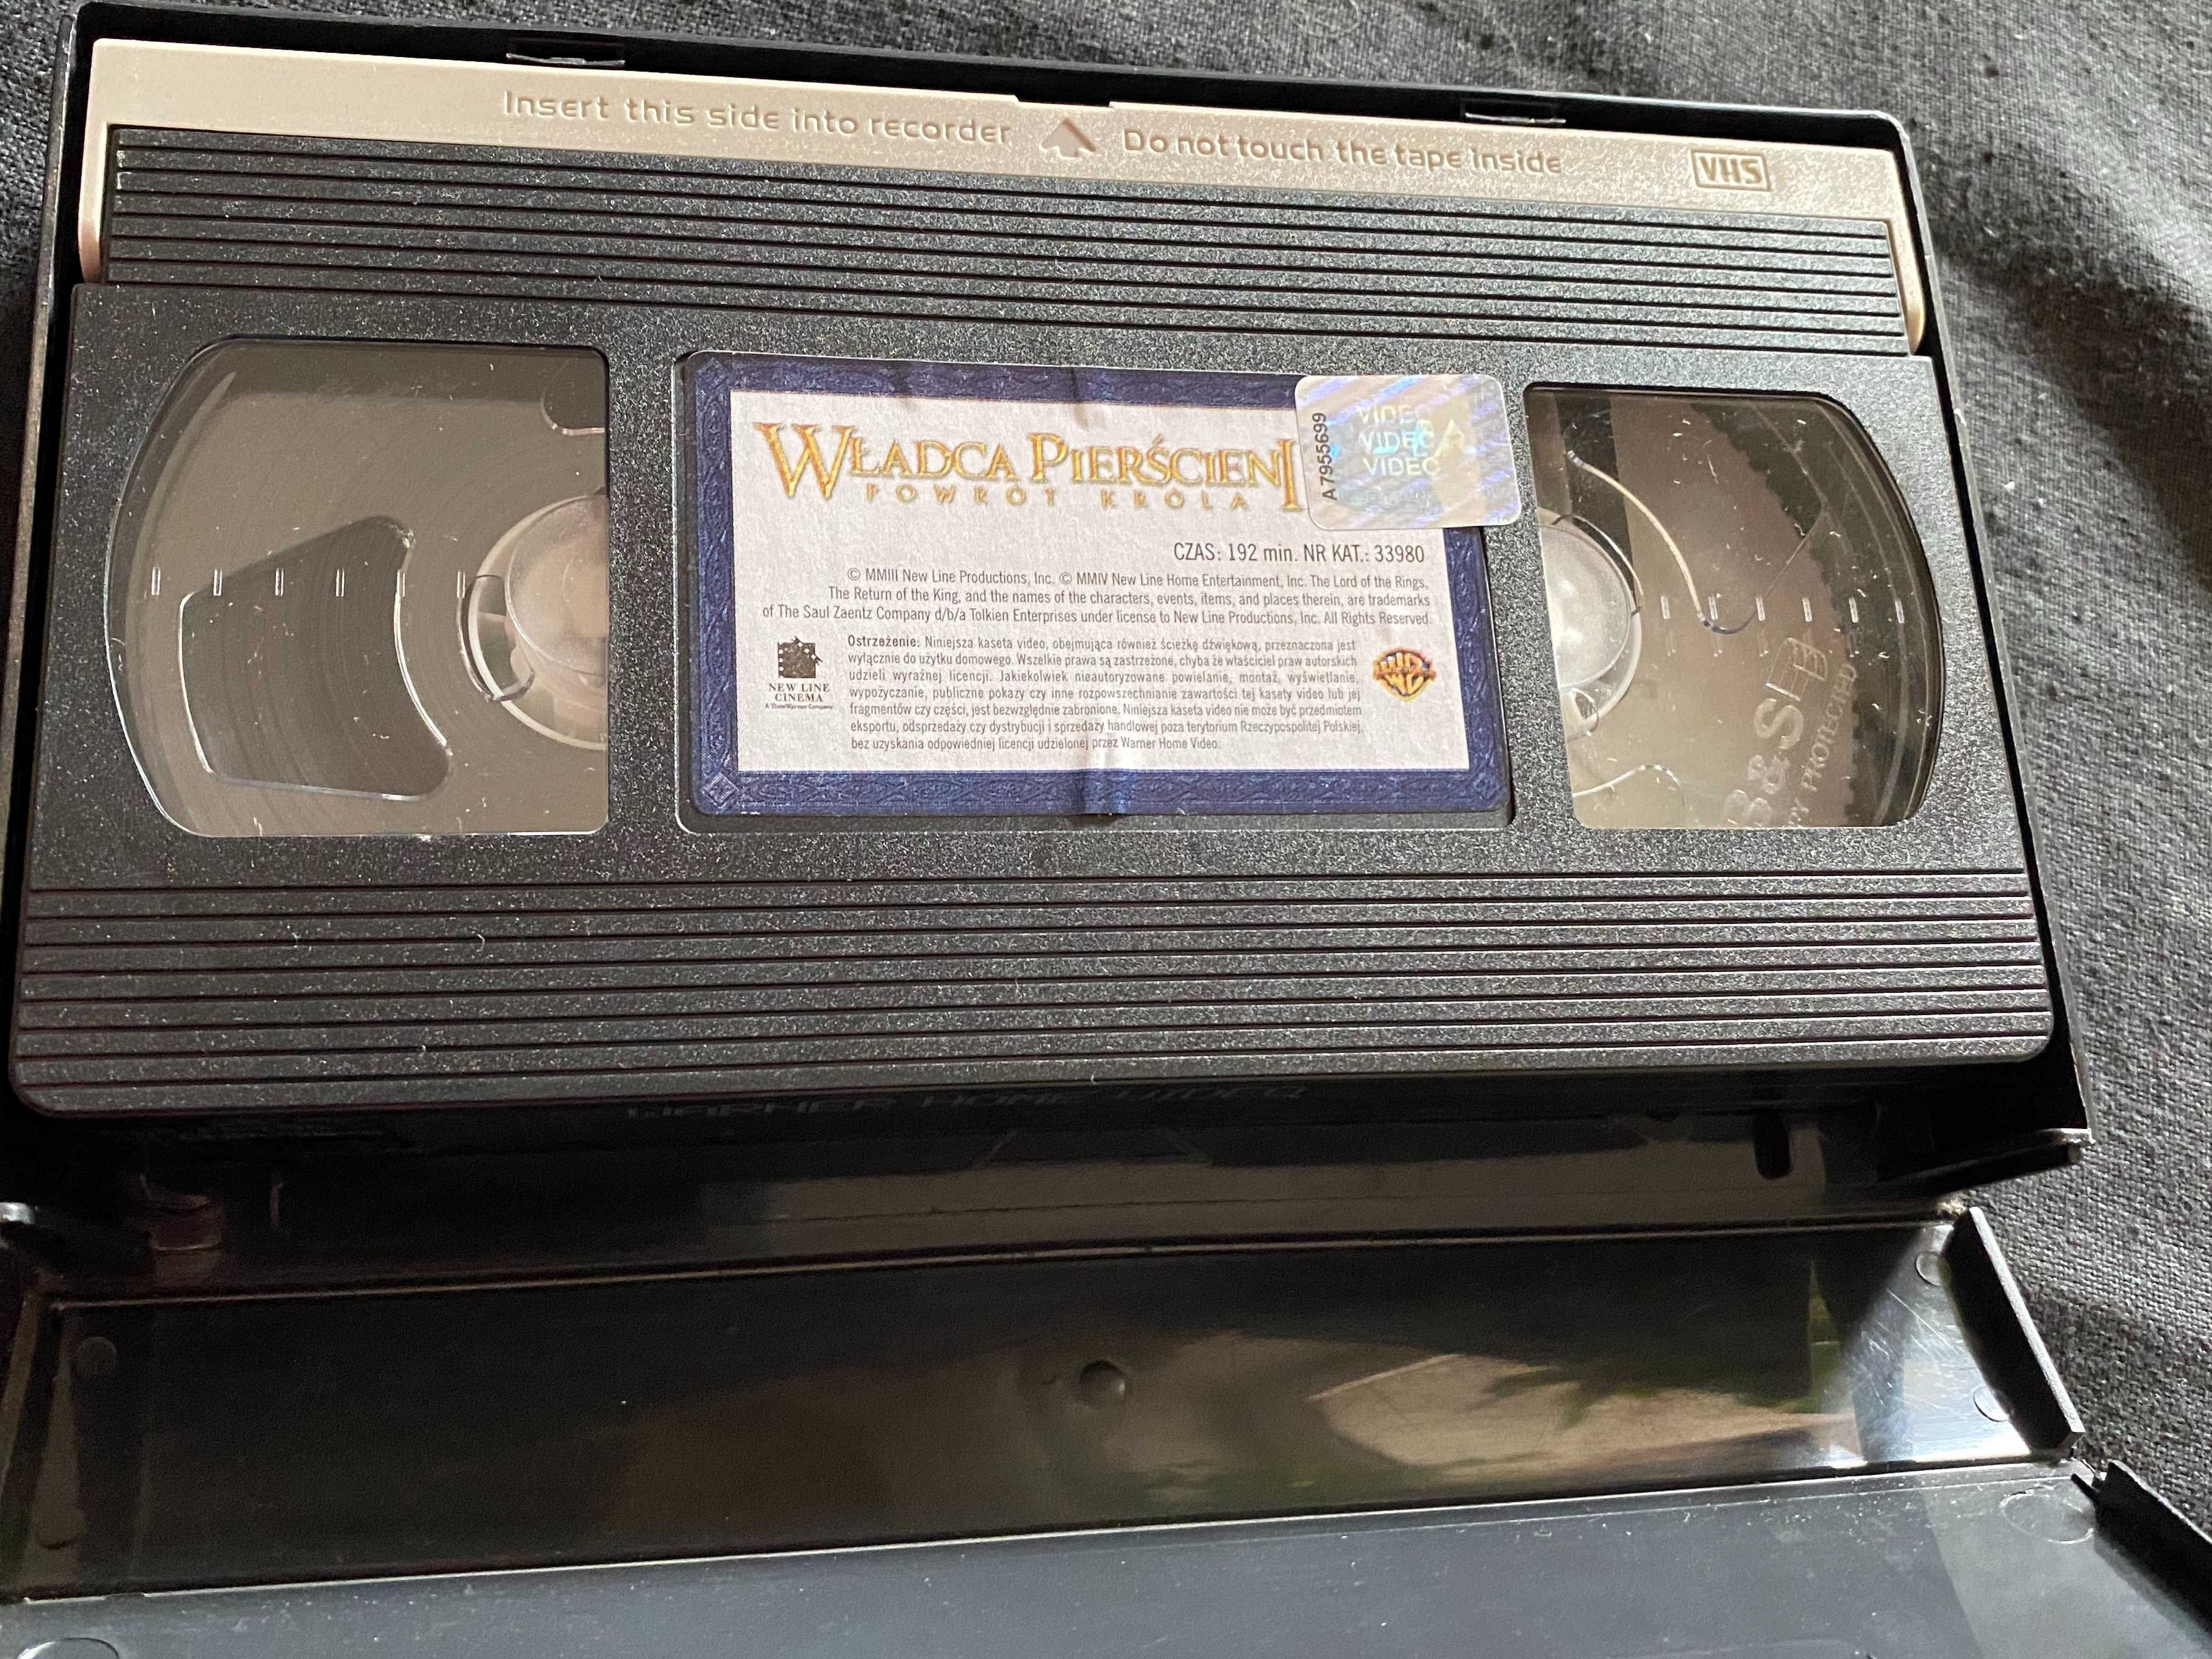 Wladca Pierscieni-POWROT KROLA-film na kasecie VHS